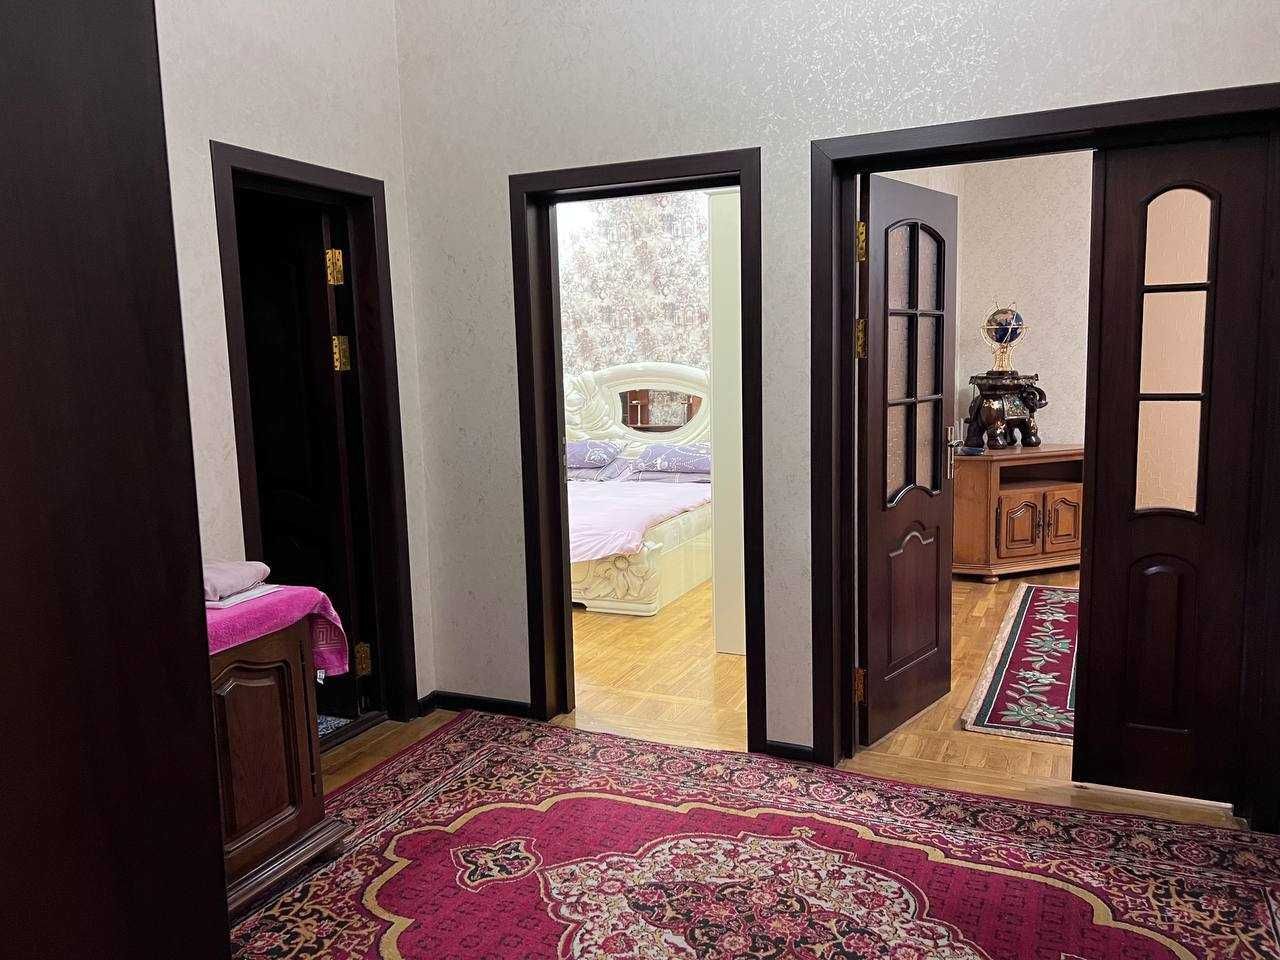 Сдается 3-х комнатная квартира в центре Ташкента